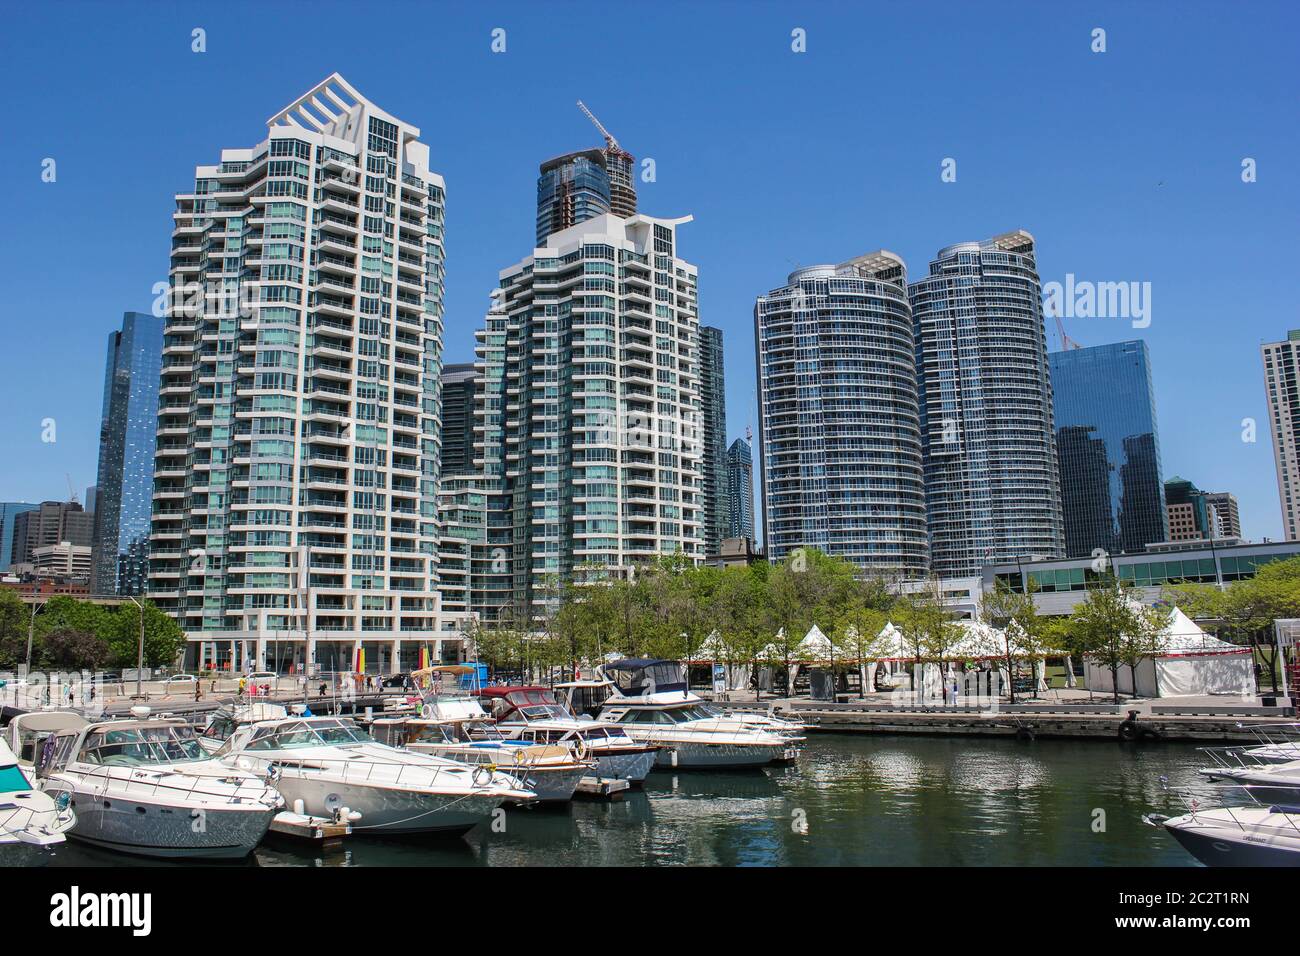 Toronto cityscape with tall buildings and the marina on Lake Ontario, Ontario, Canada Stock Photo